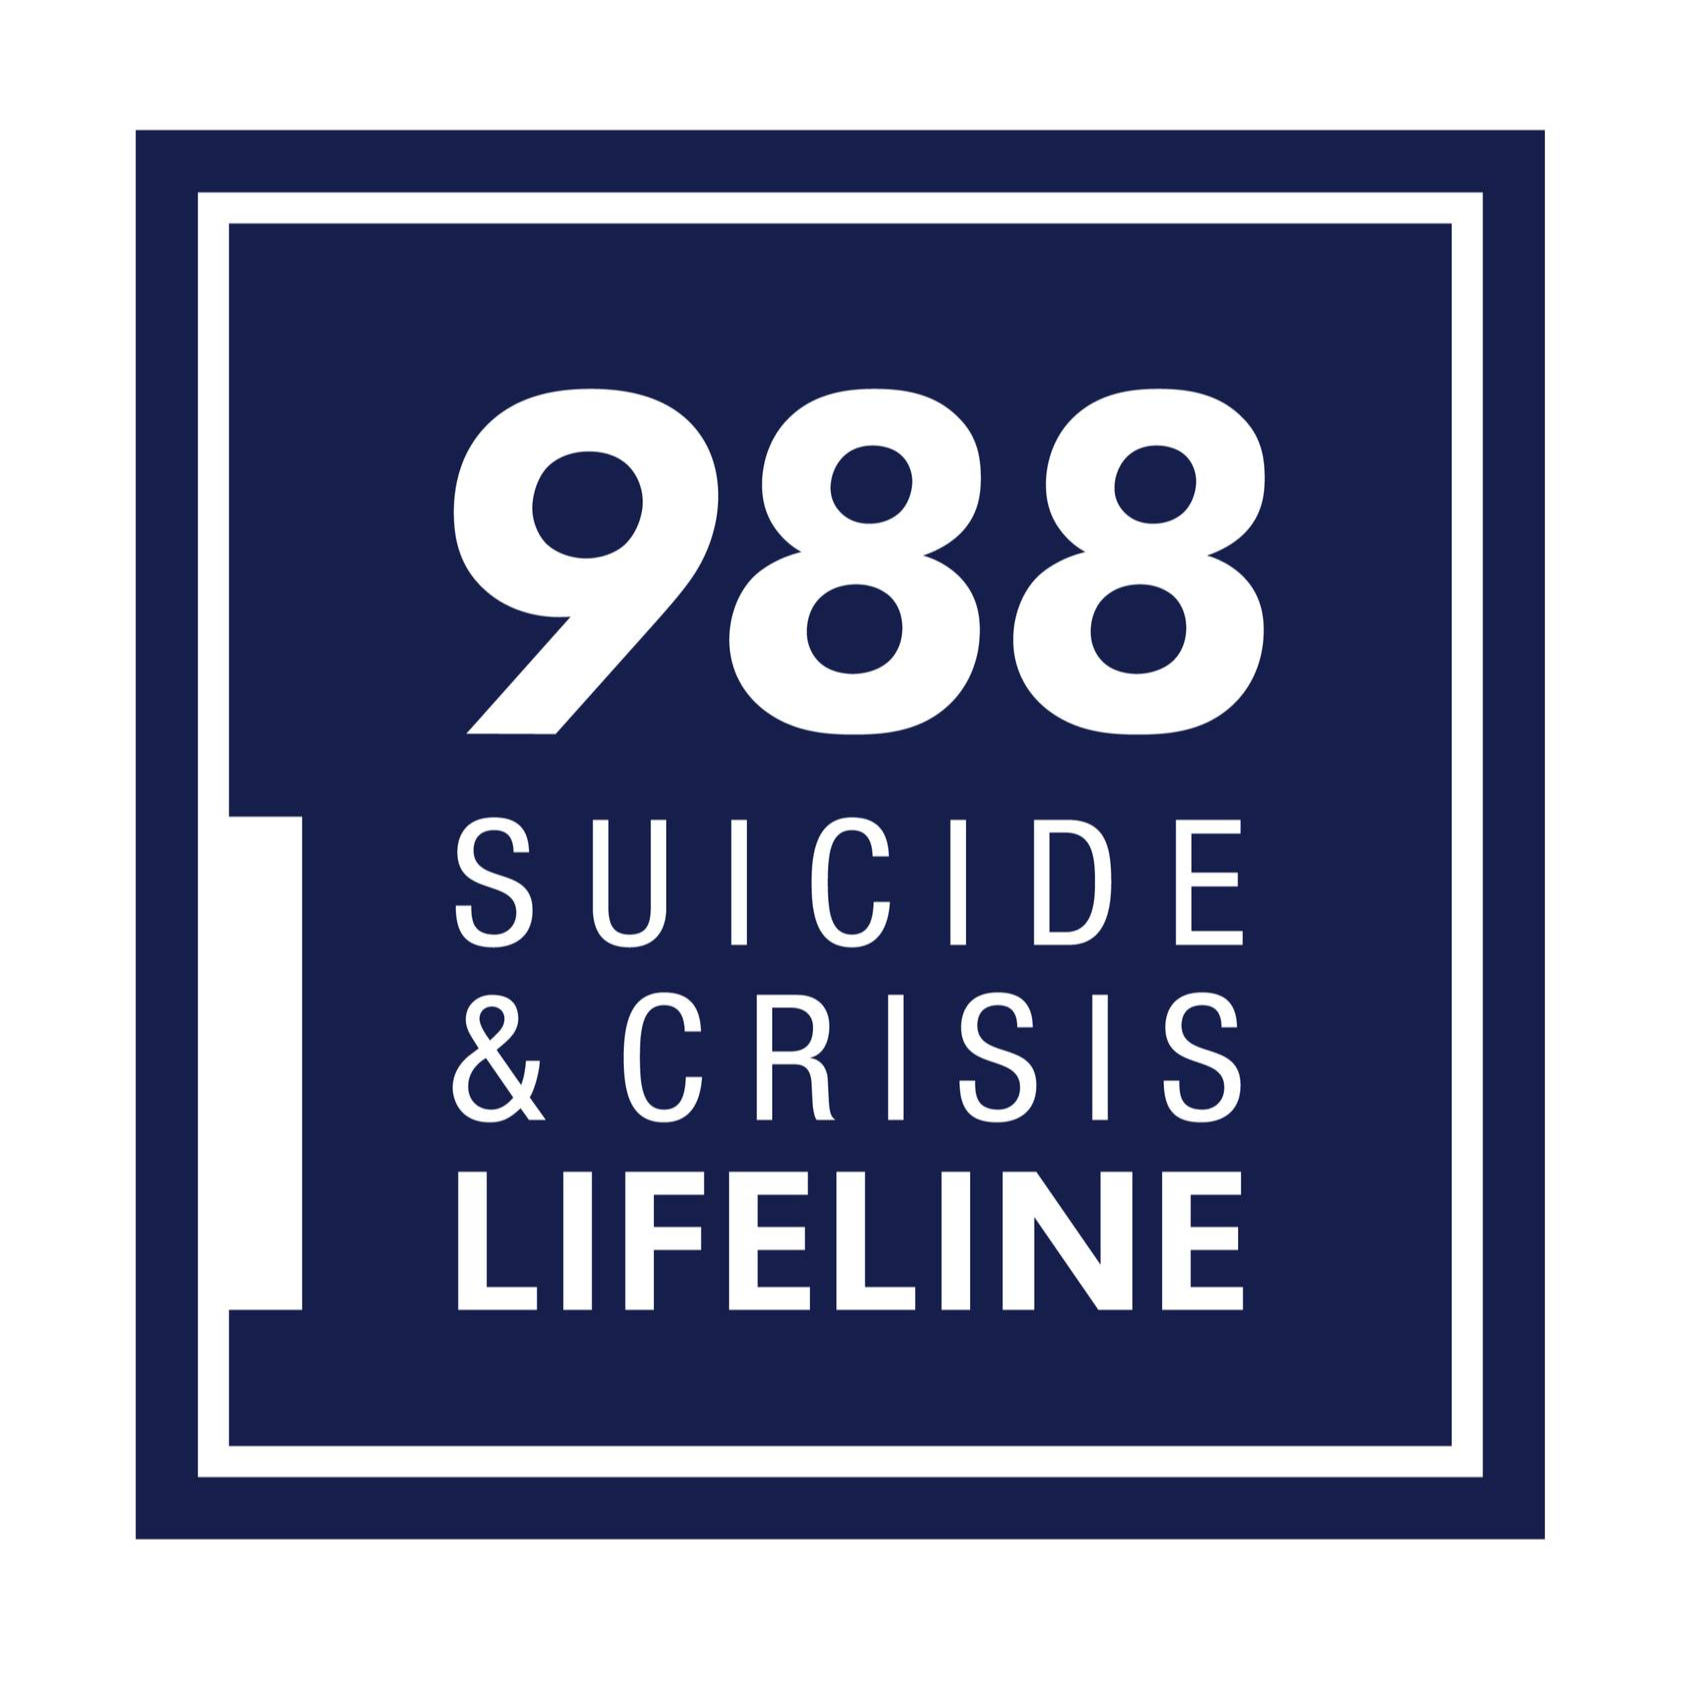 NATIONAL SUICIDE PREVENTION LIFELINE 1-800-273-8255 WWW.SUICIDEPREVENTIONLIFELINE.ORG